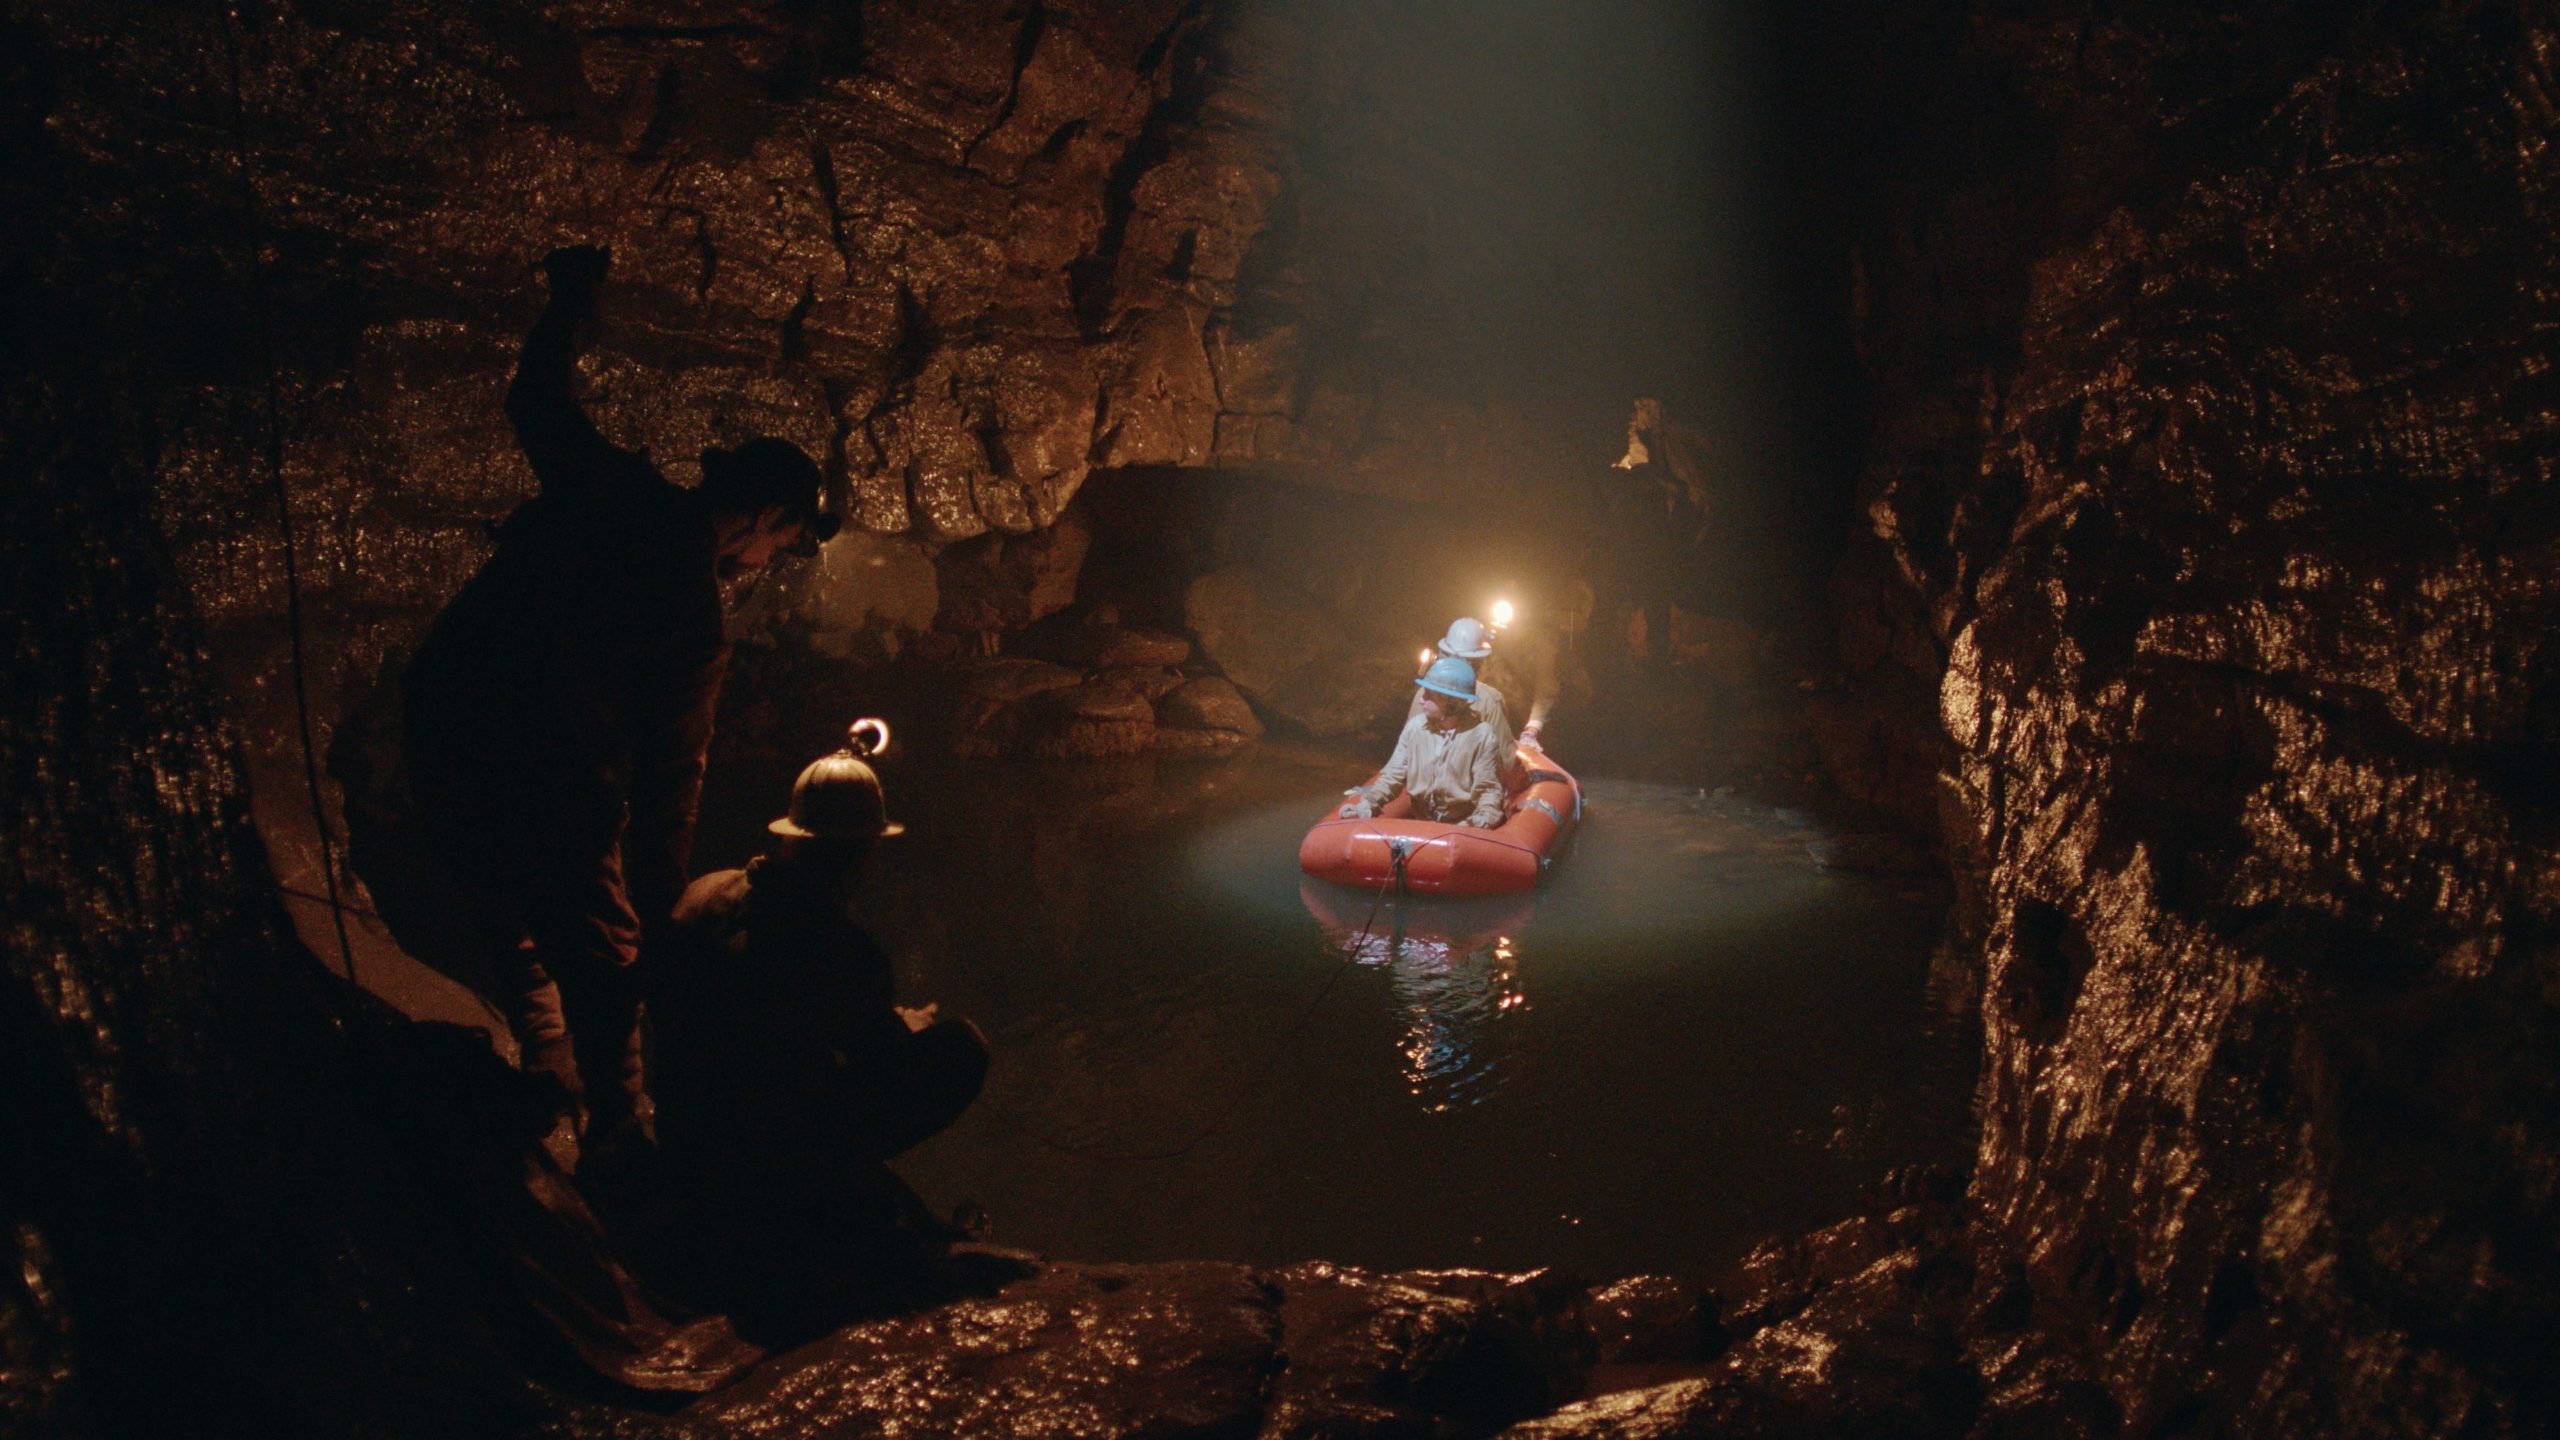 Image du film "Il buco"